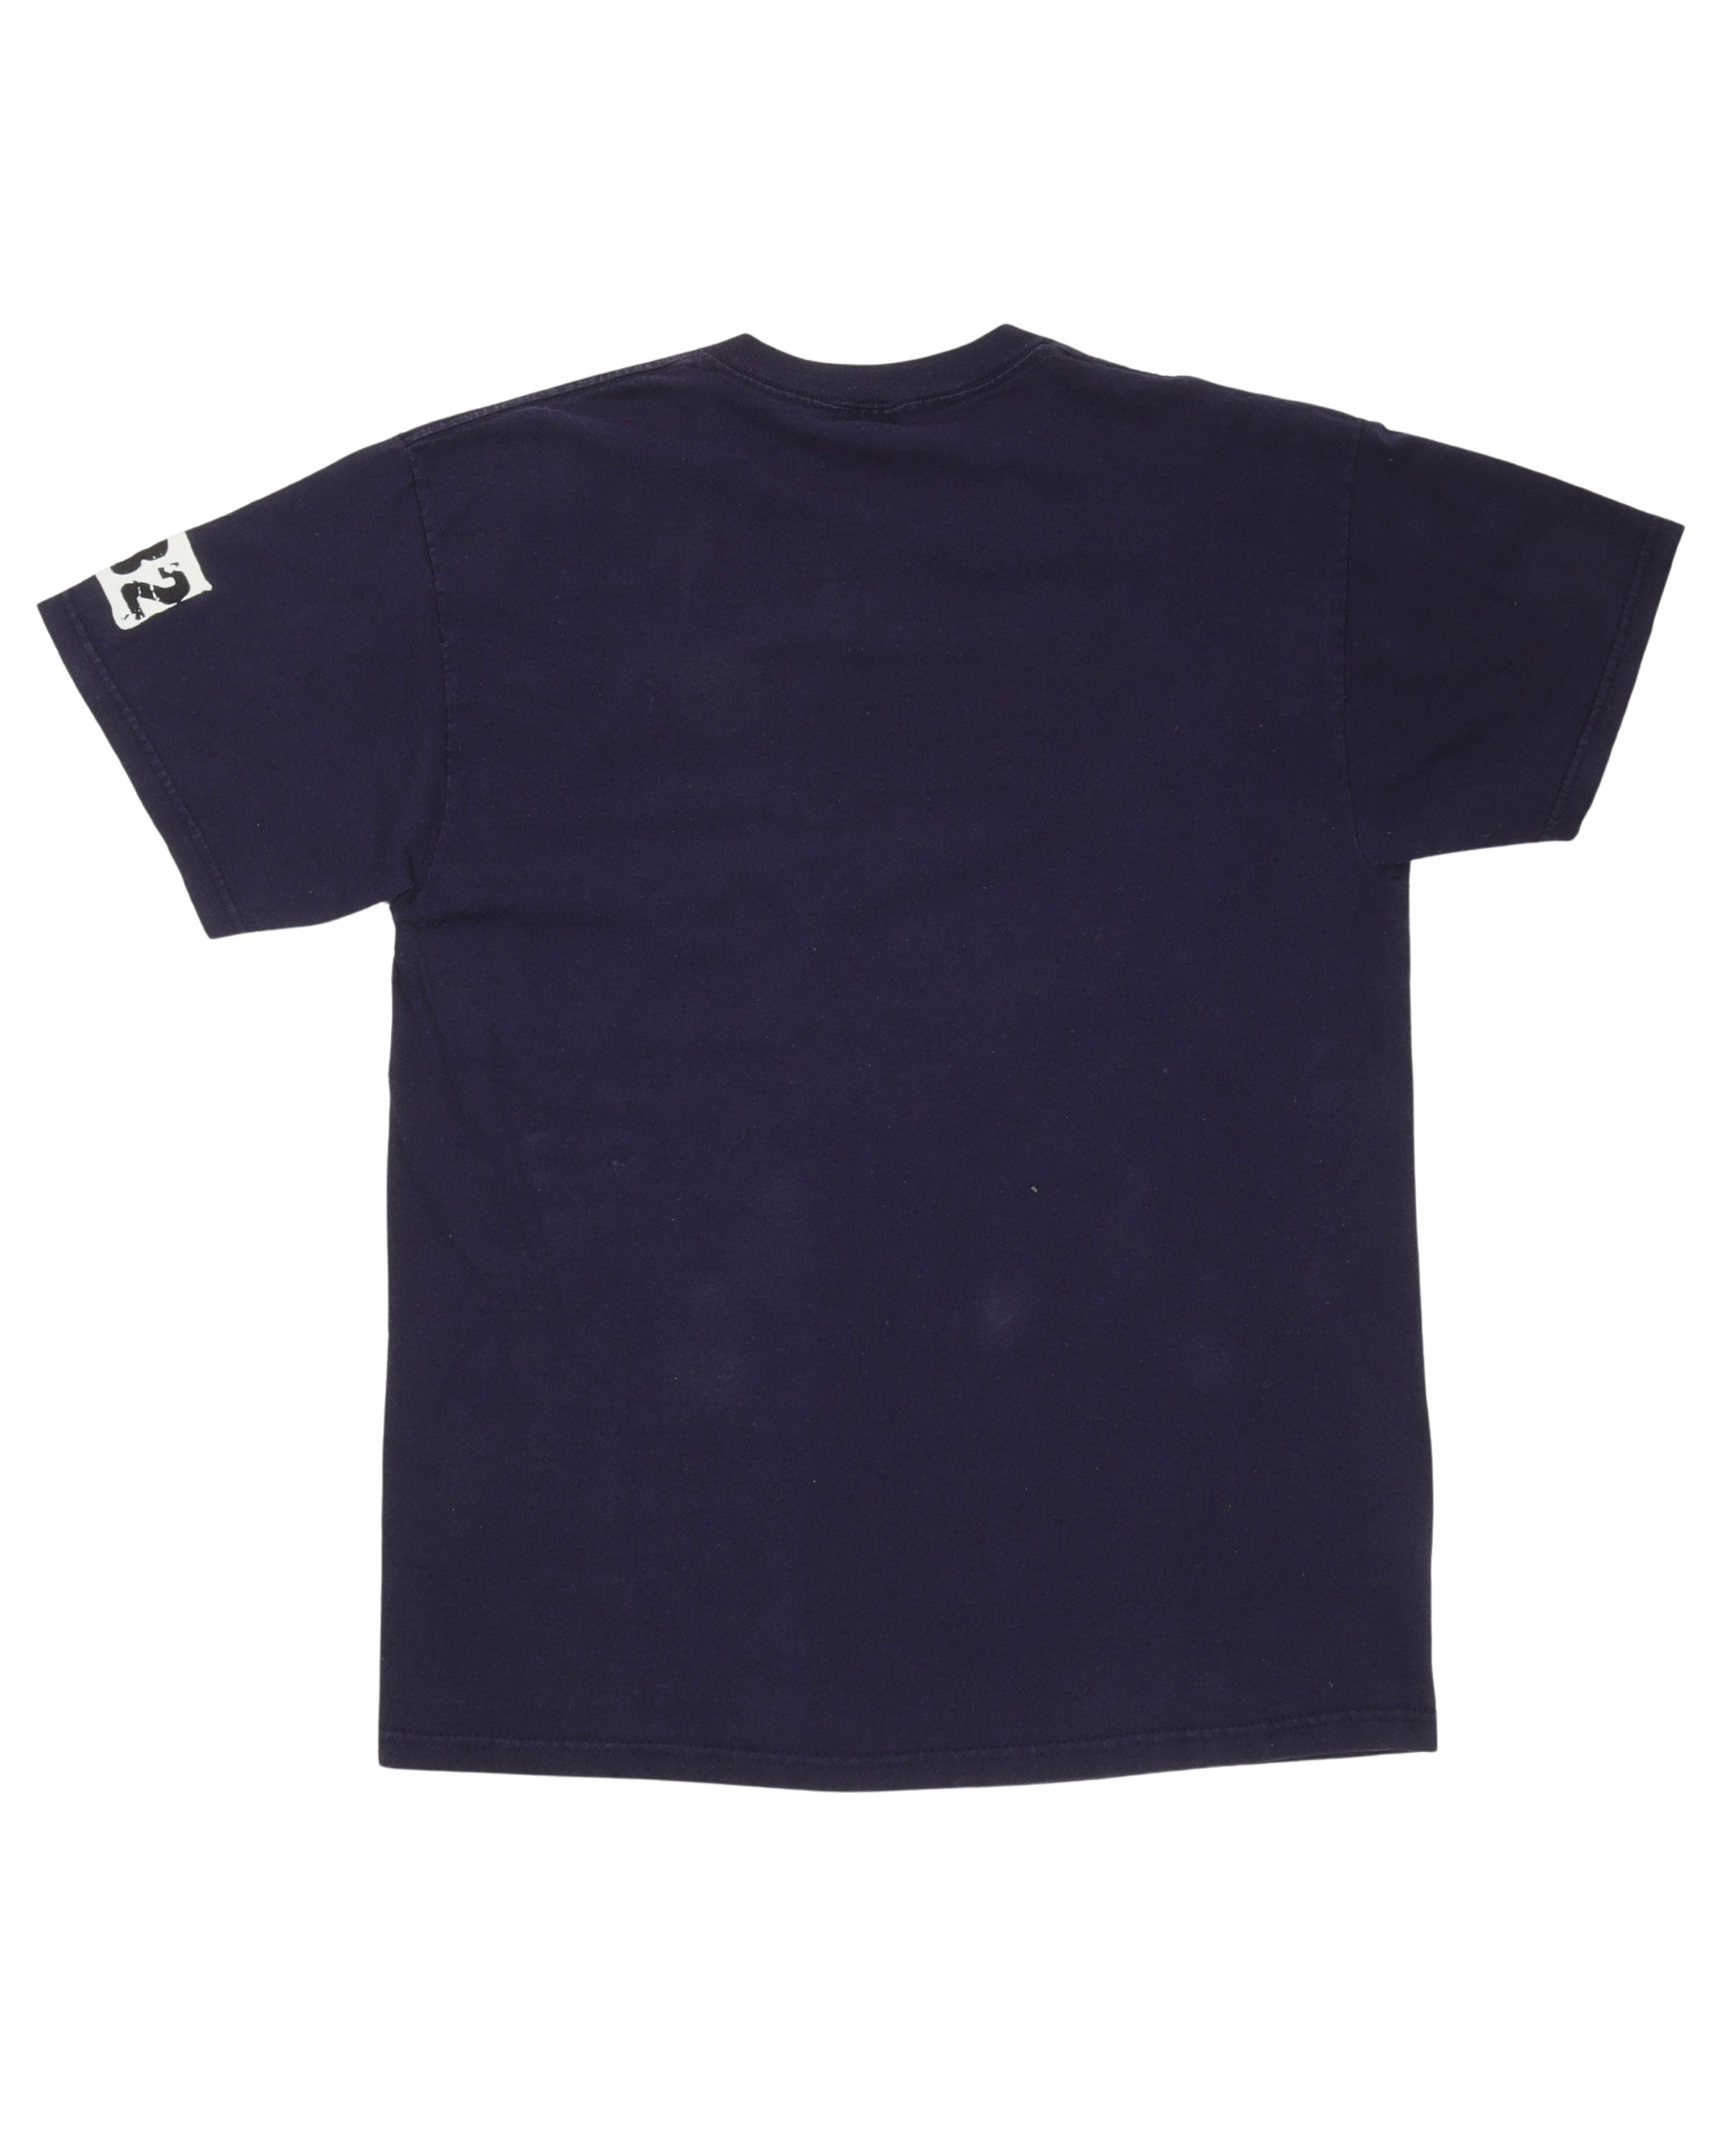 Blink 182 Blocks T-Shirt